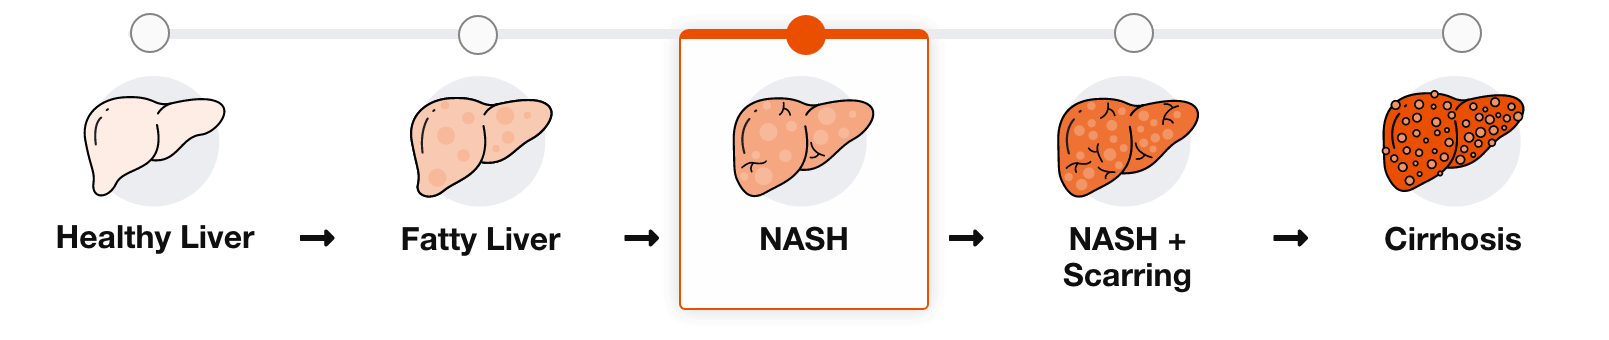 NASH: Toxic Fat Buildup and Inflammation